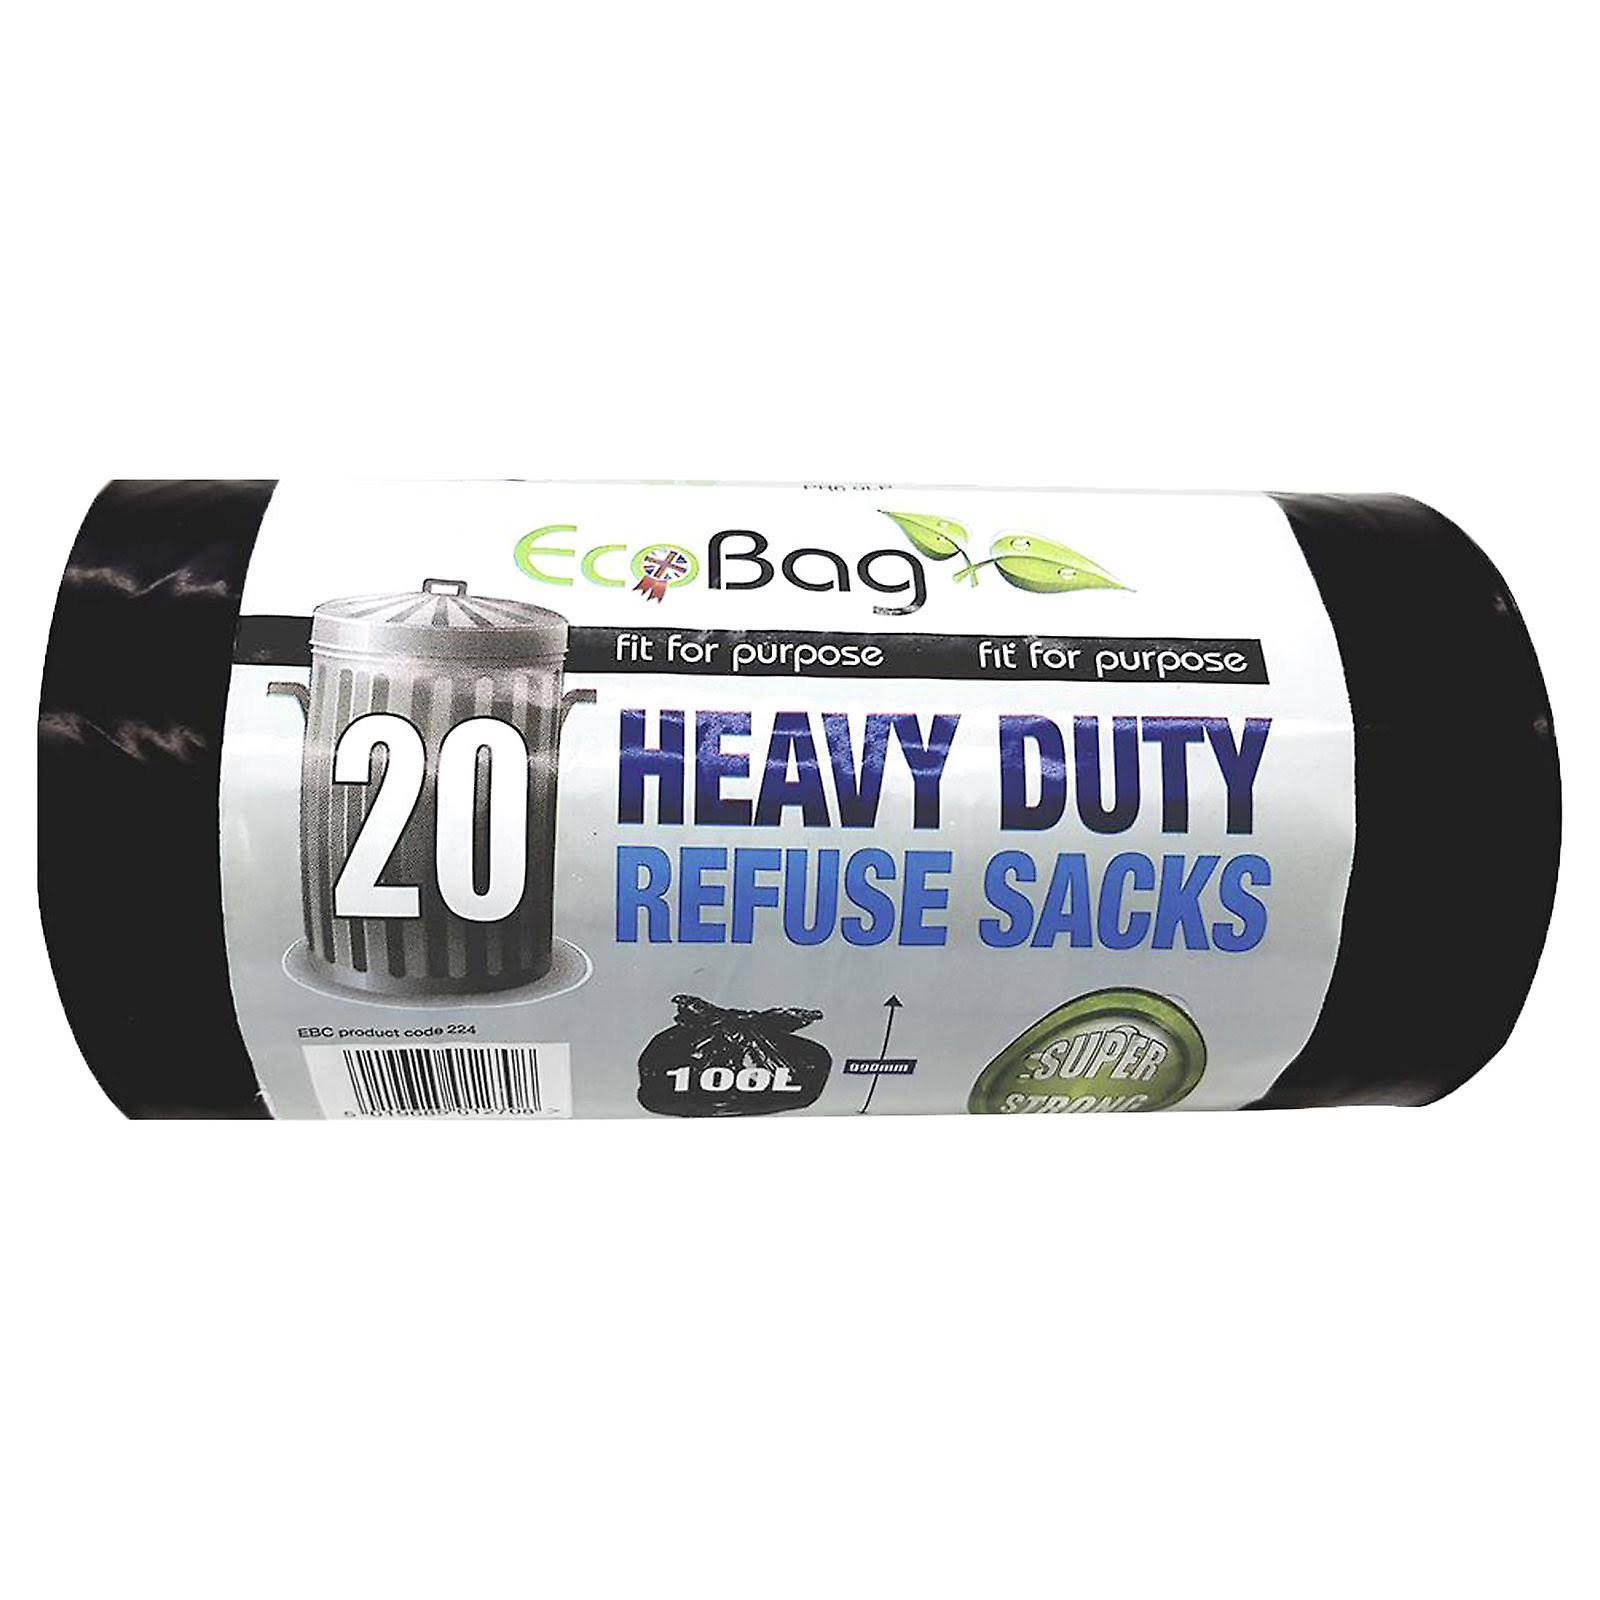 Eco Bag Heavy Duty Refuse Sacks - Black, 100l, 20 Bags